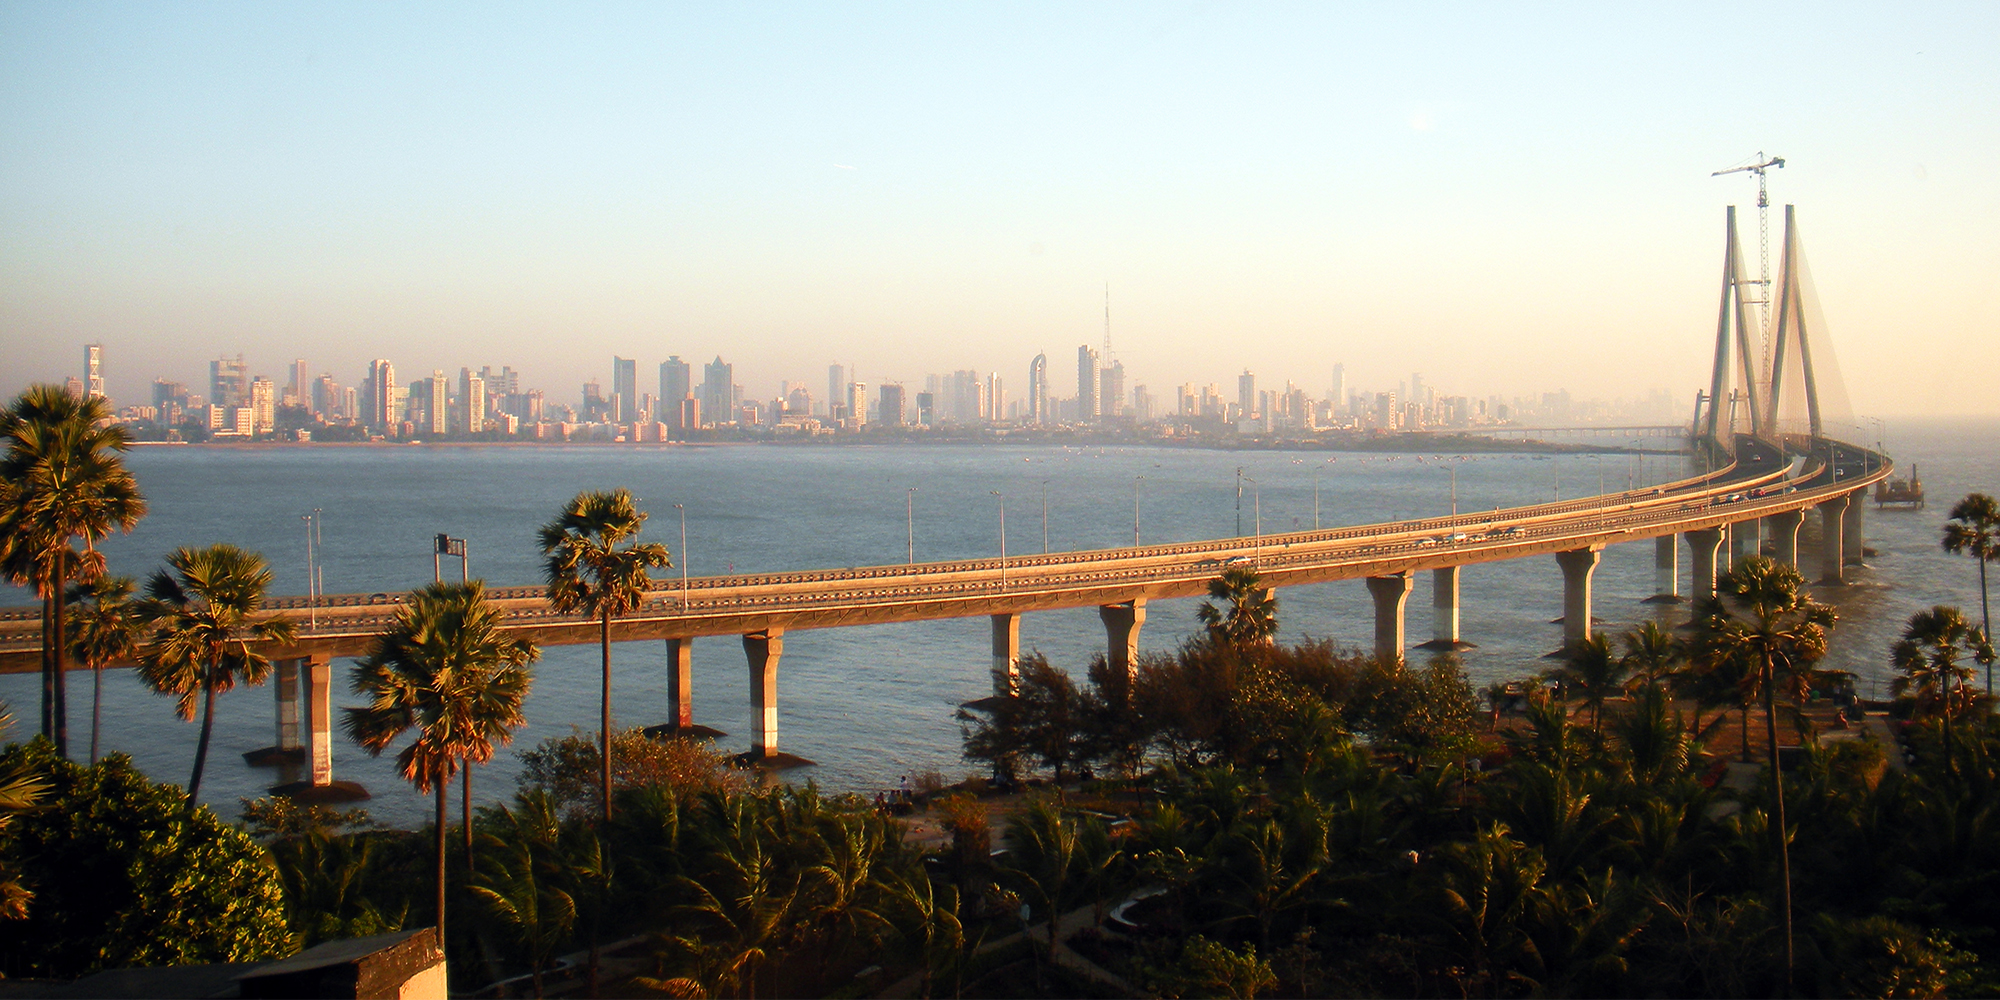 Mumbai (Bandra Worli Sea Link) – the business capital of India. Credit: Woodysworldtv – http://www.flickr.com/photos/woodysworldtv/5530750545/sizes/o/